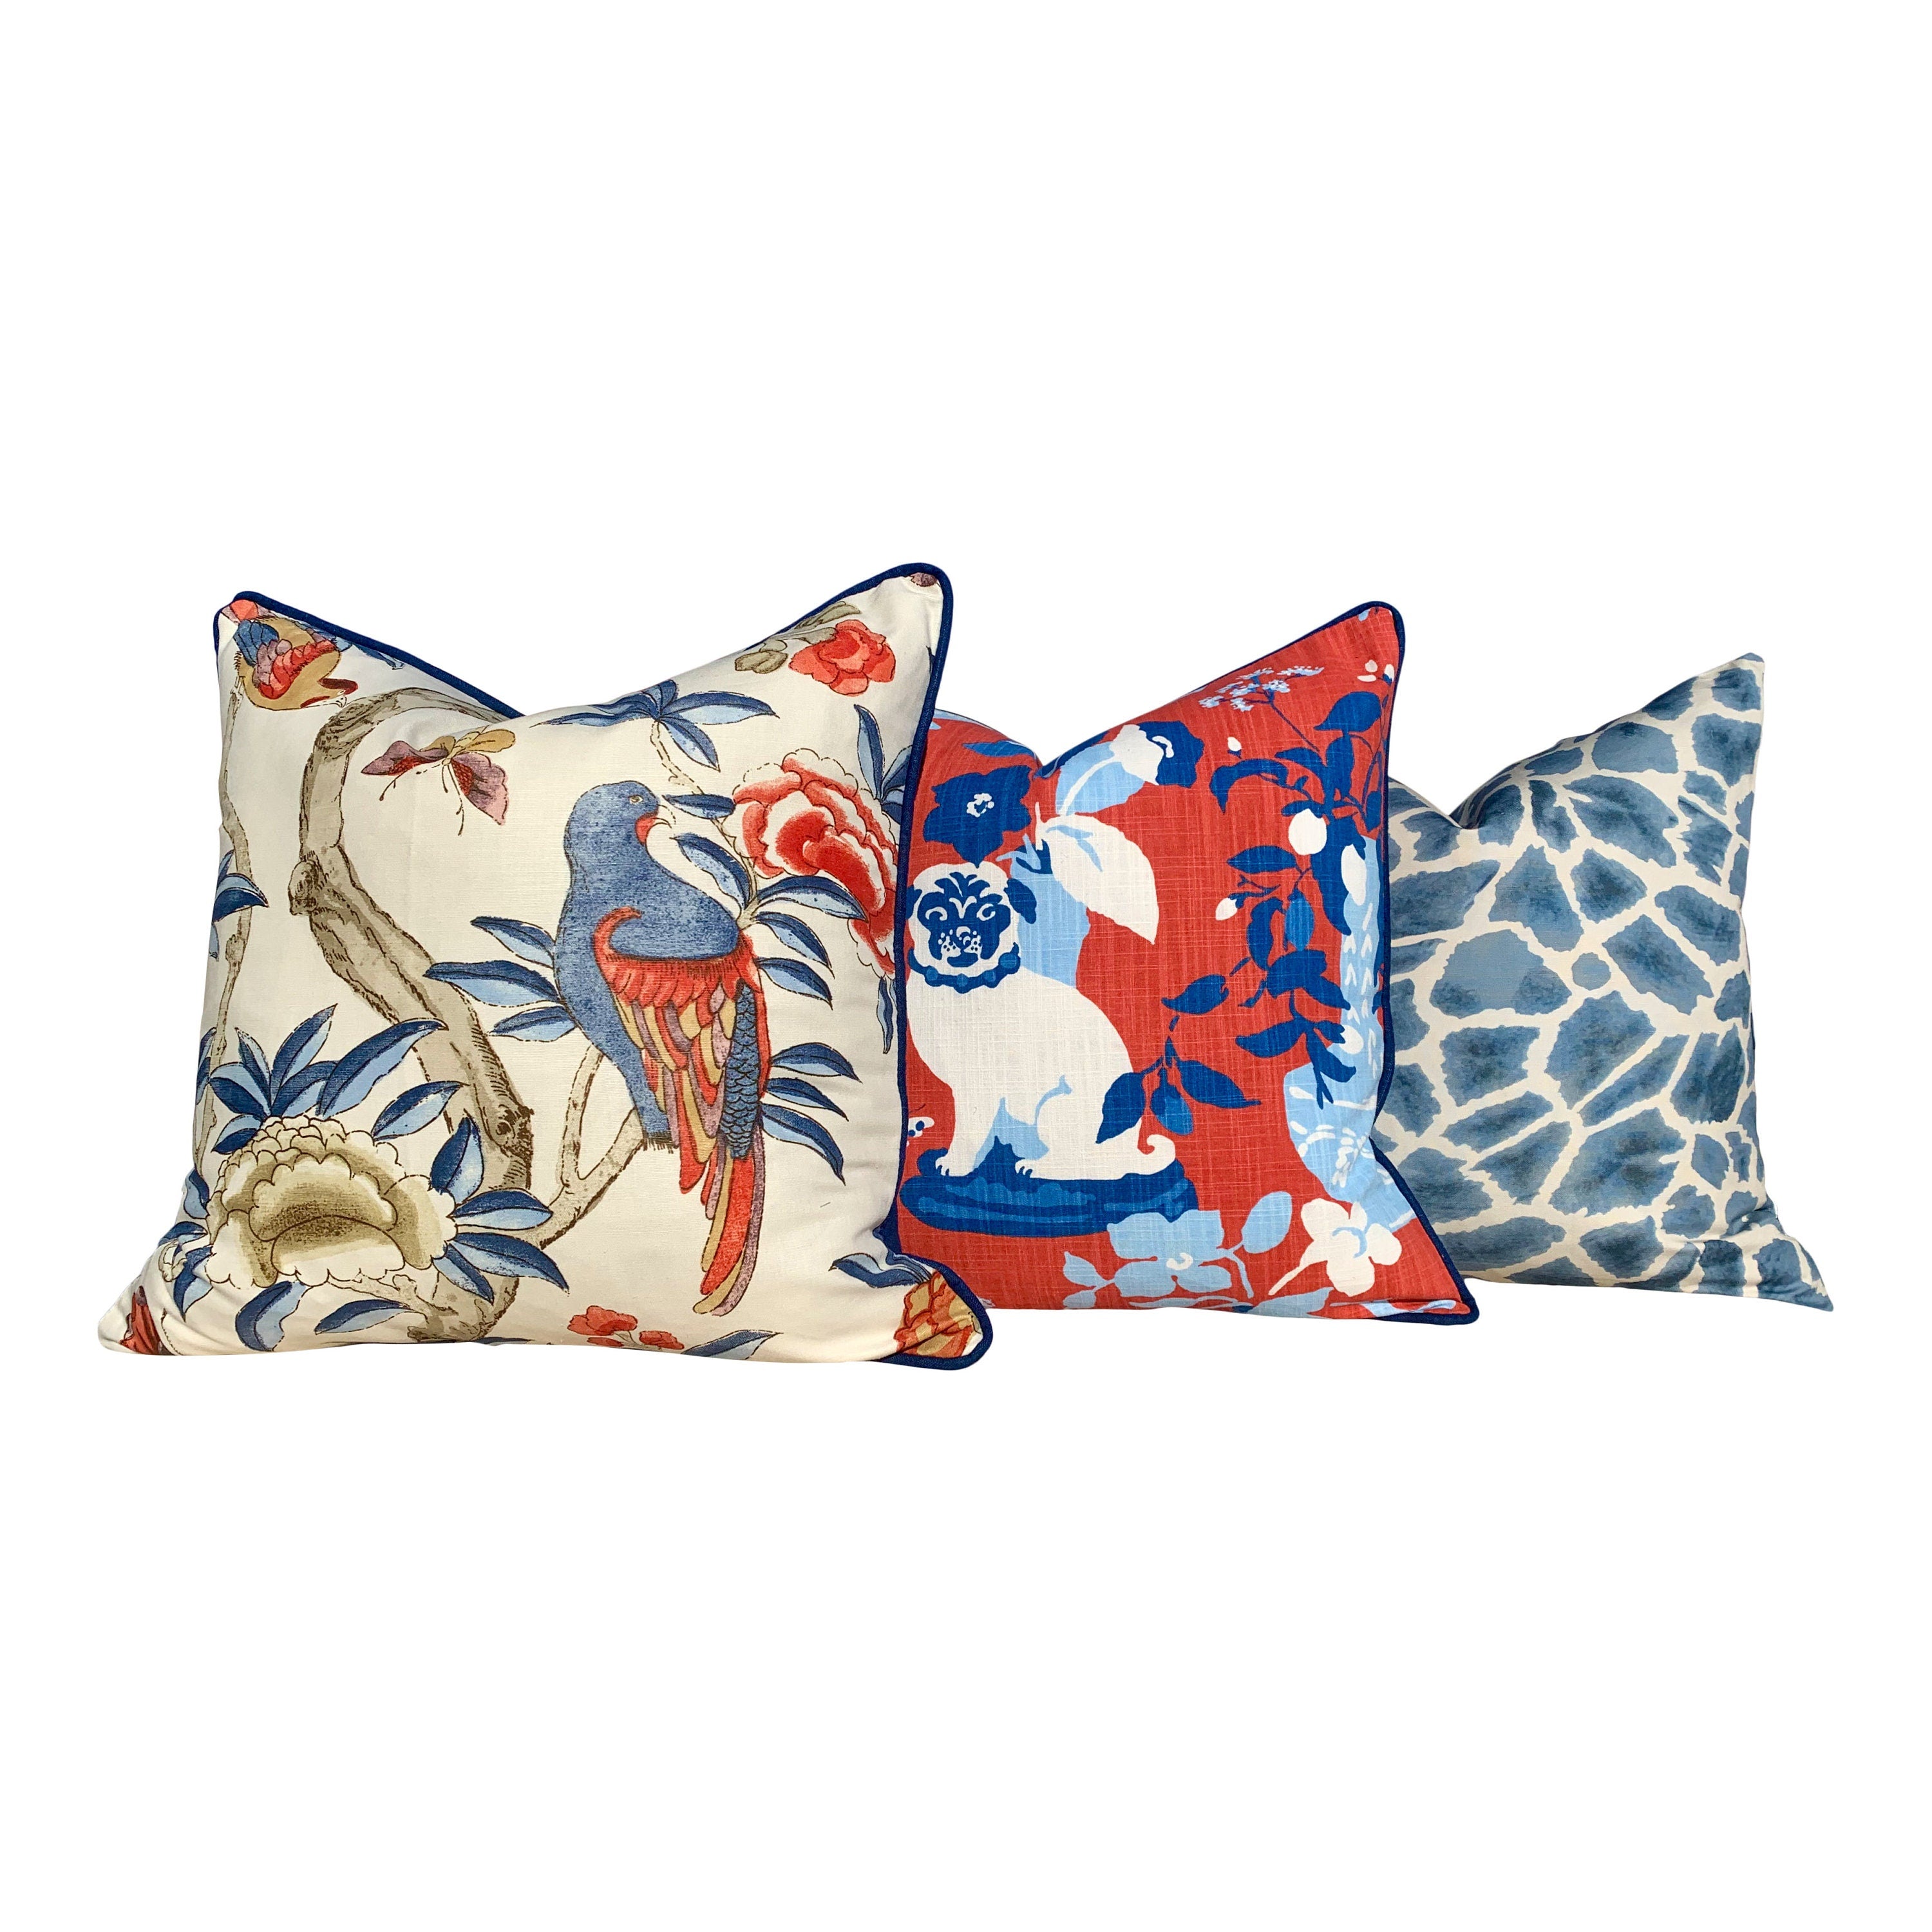 Thibaut Makena Decorative Pillow in Slate Blue. Giraffe Lumbar Cushion Cover Blue. Designer Pillow Cover. Accent throw pillow.